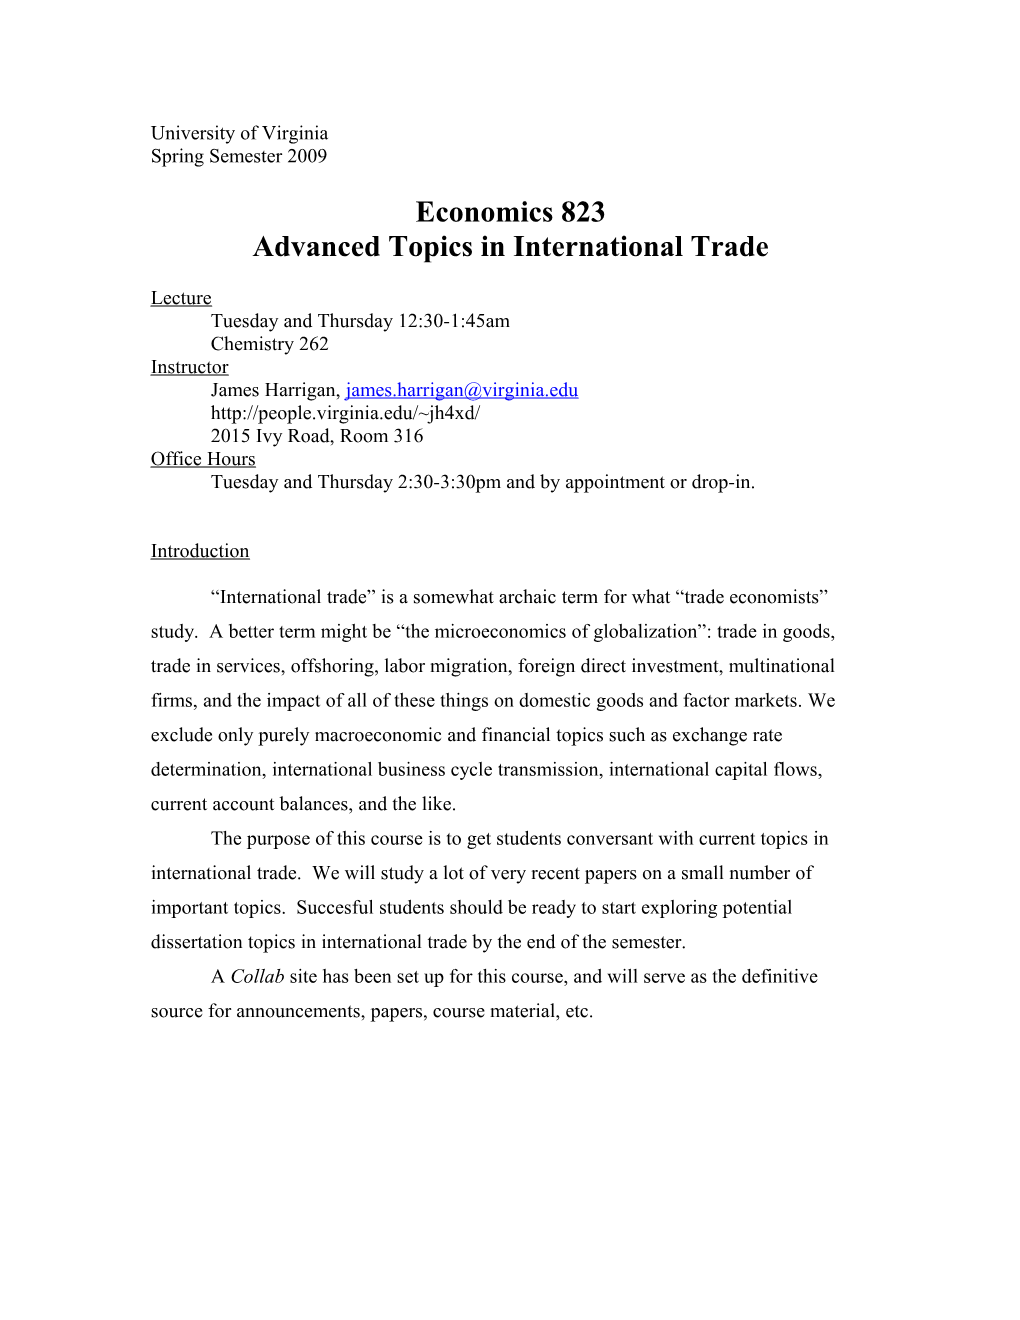 Advanced Topics in International Trade